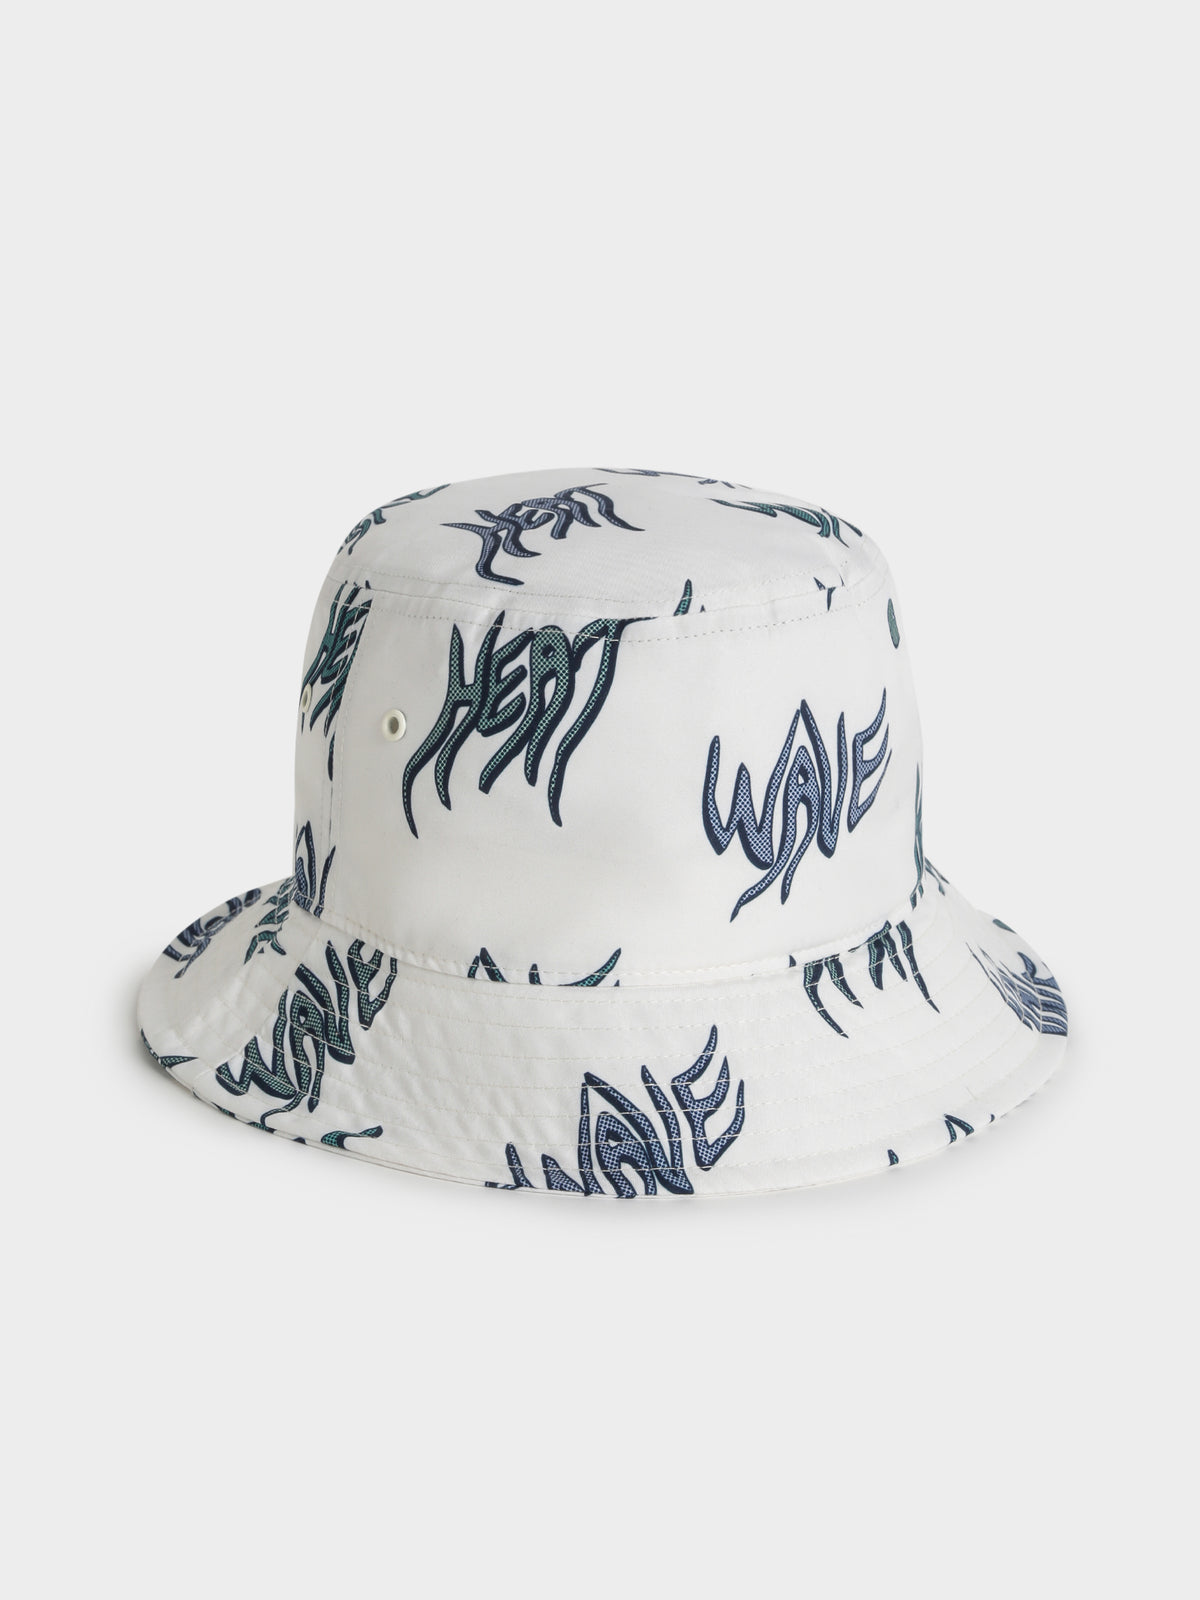 Heat Wave Bucket Hat in Print